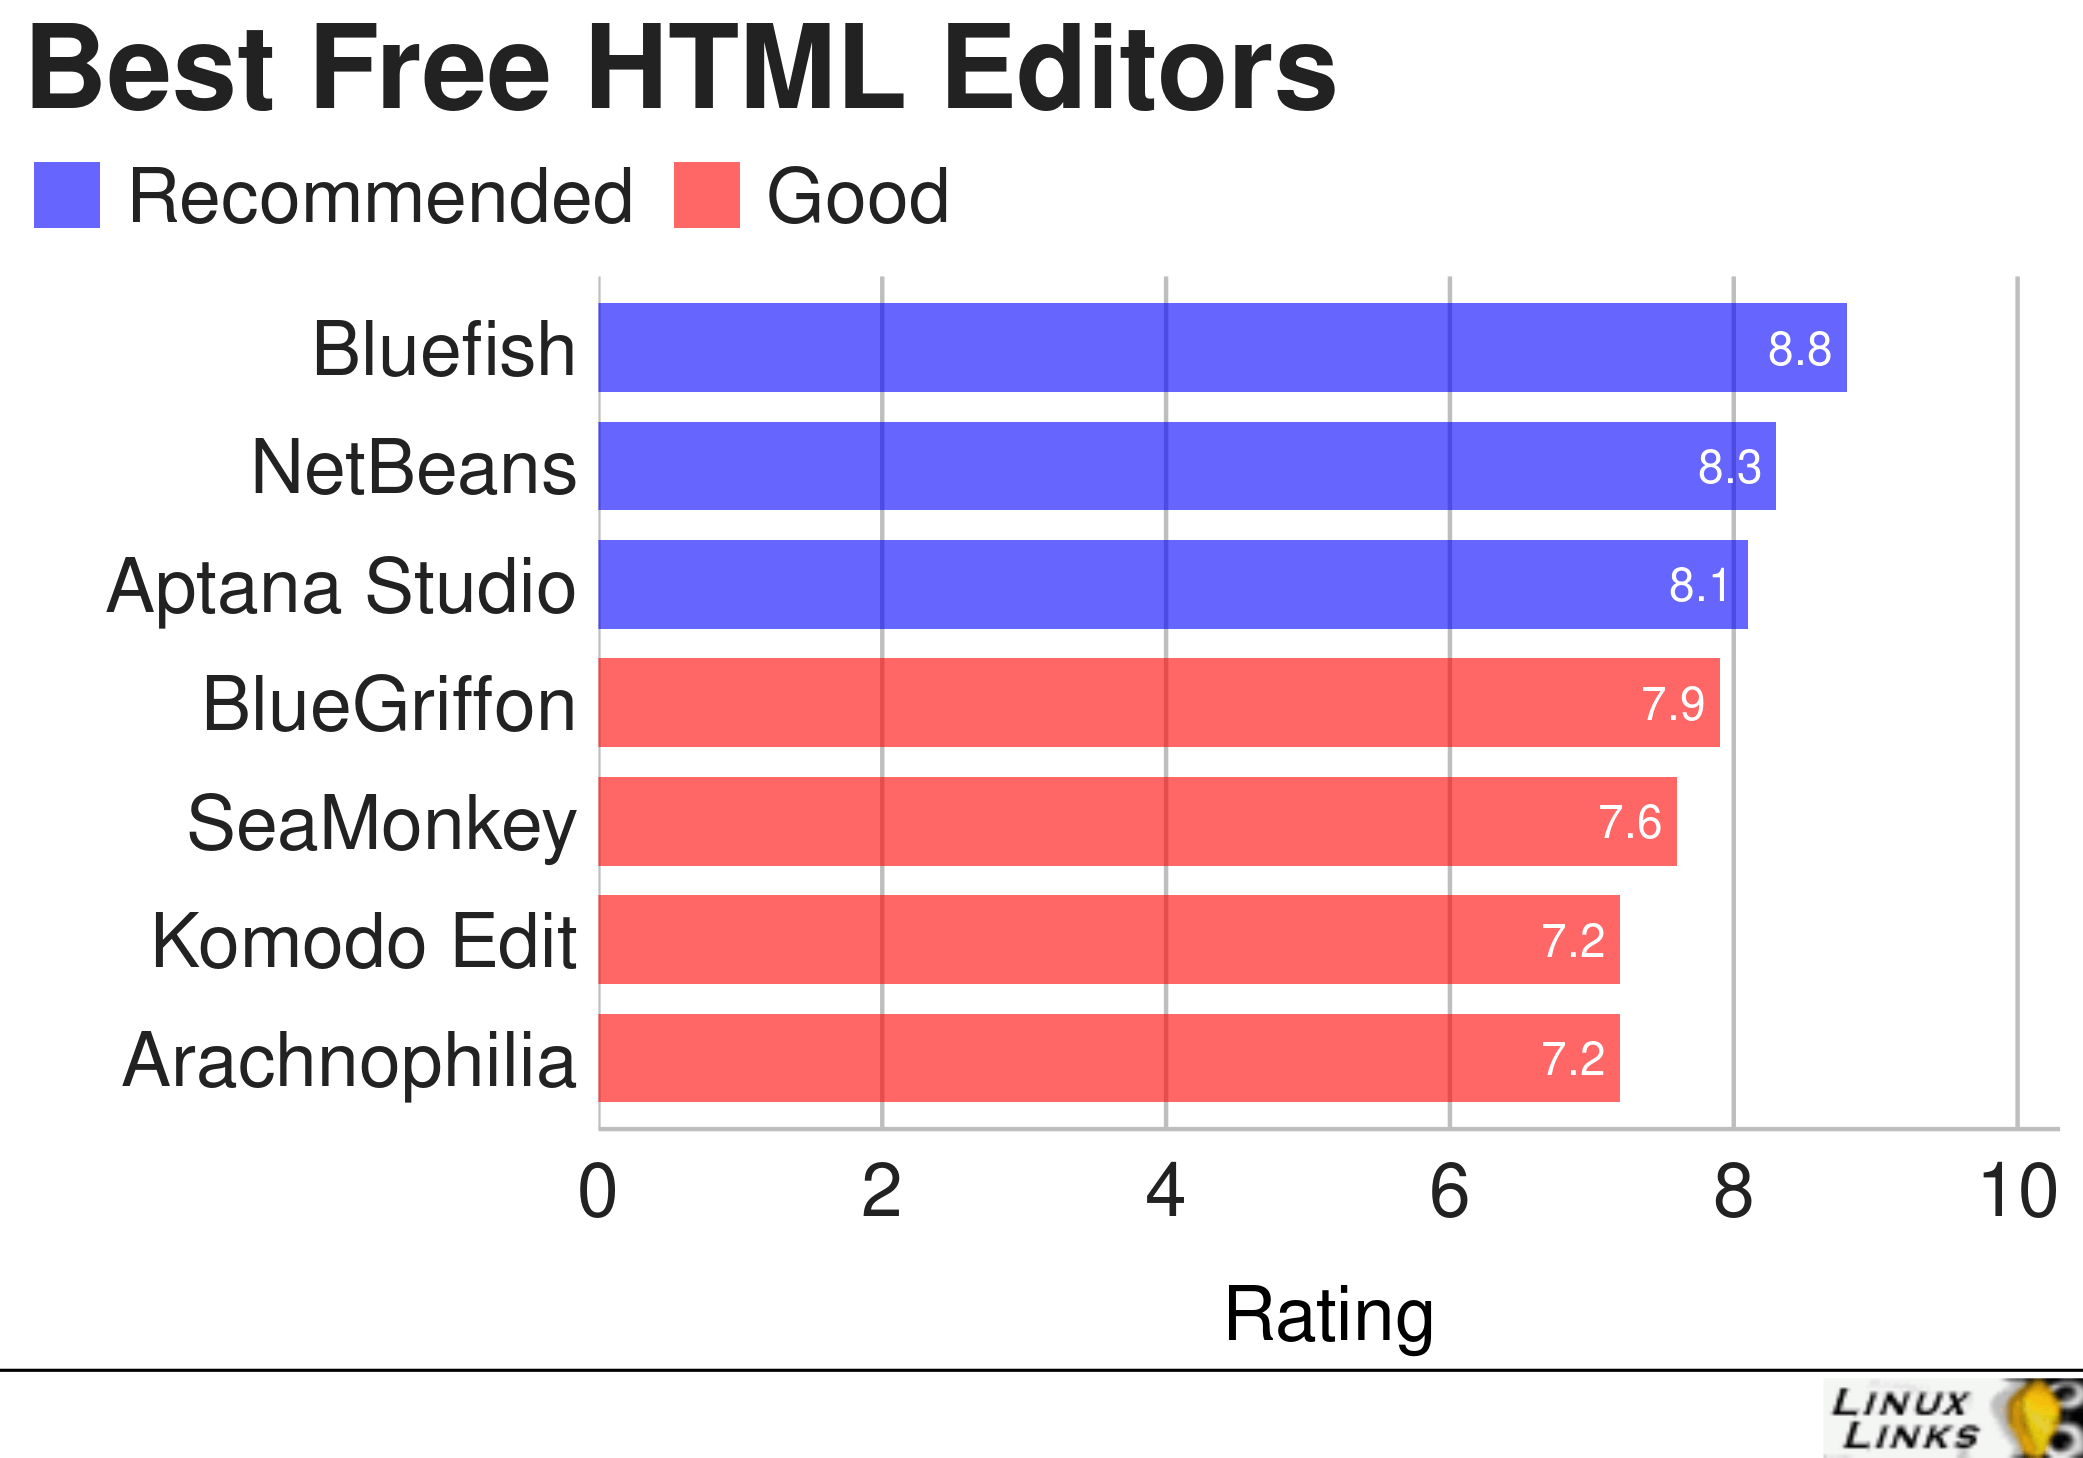 best html editor for mac 2017